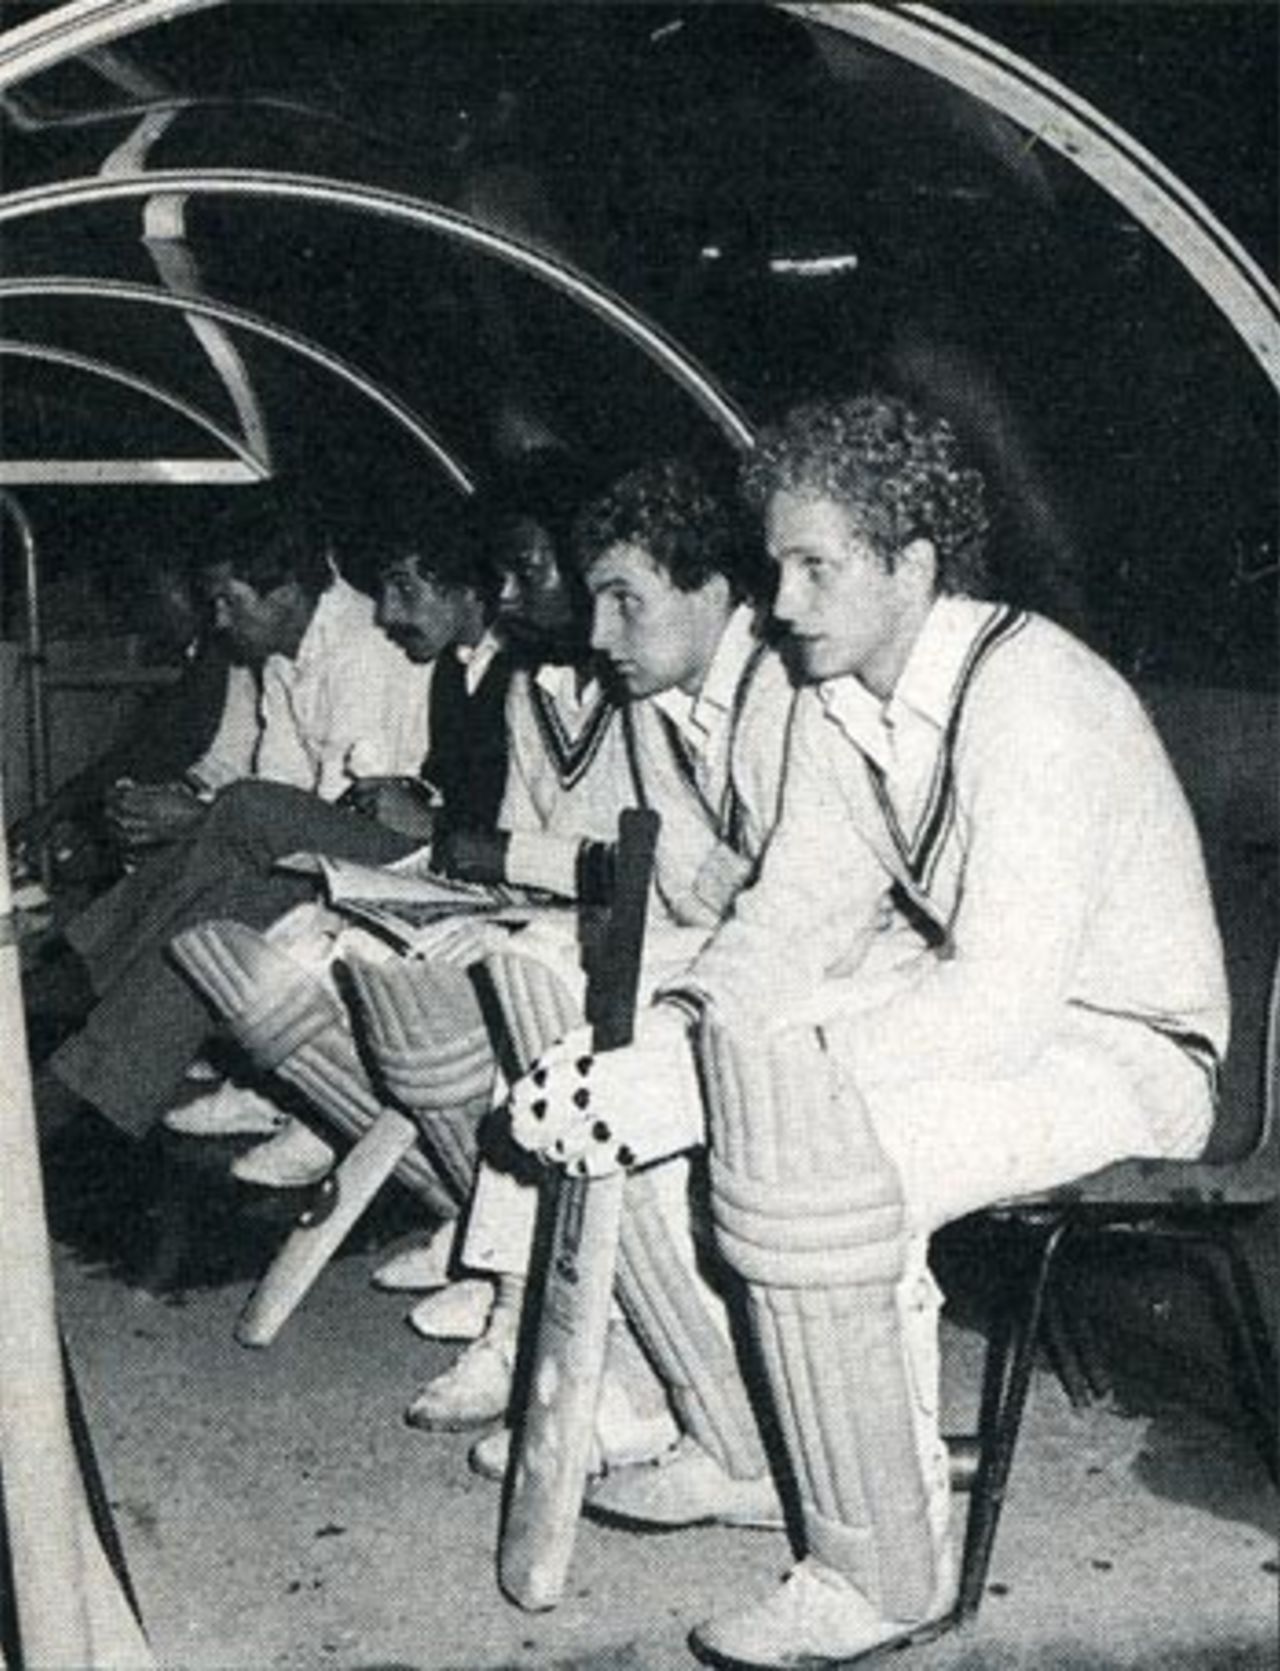 David Gower, Gordon Parsons, Andy Roberts and Chris Balderstone wait to bat during a floodlit Lambert & Butler match at Stamford Bridge, September 17, 1981